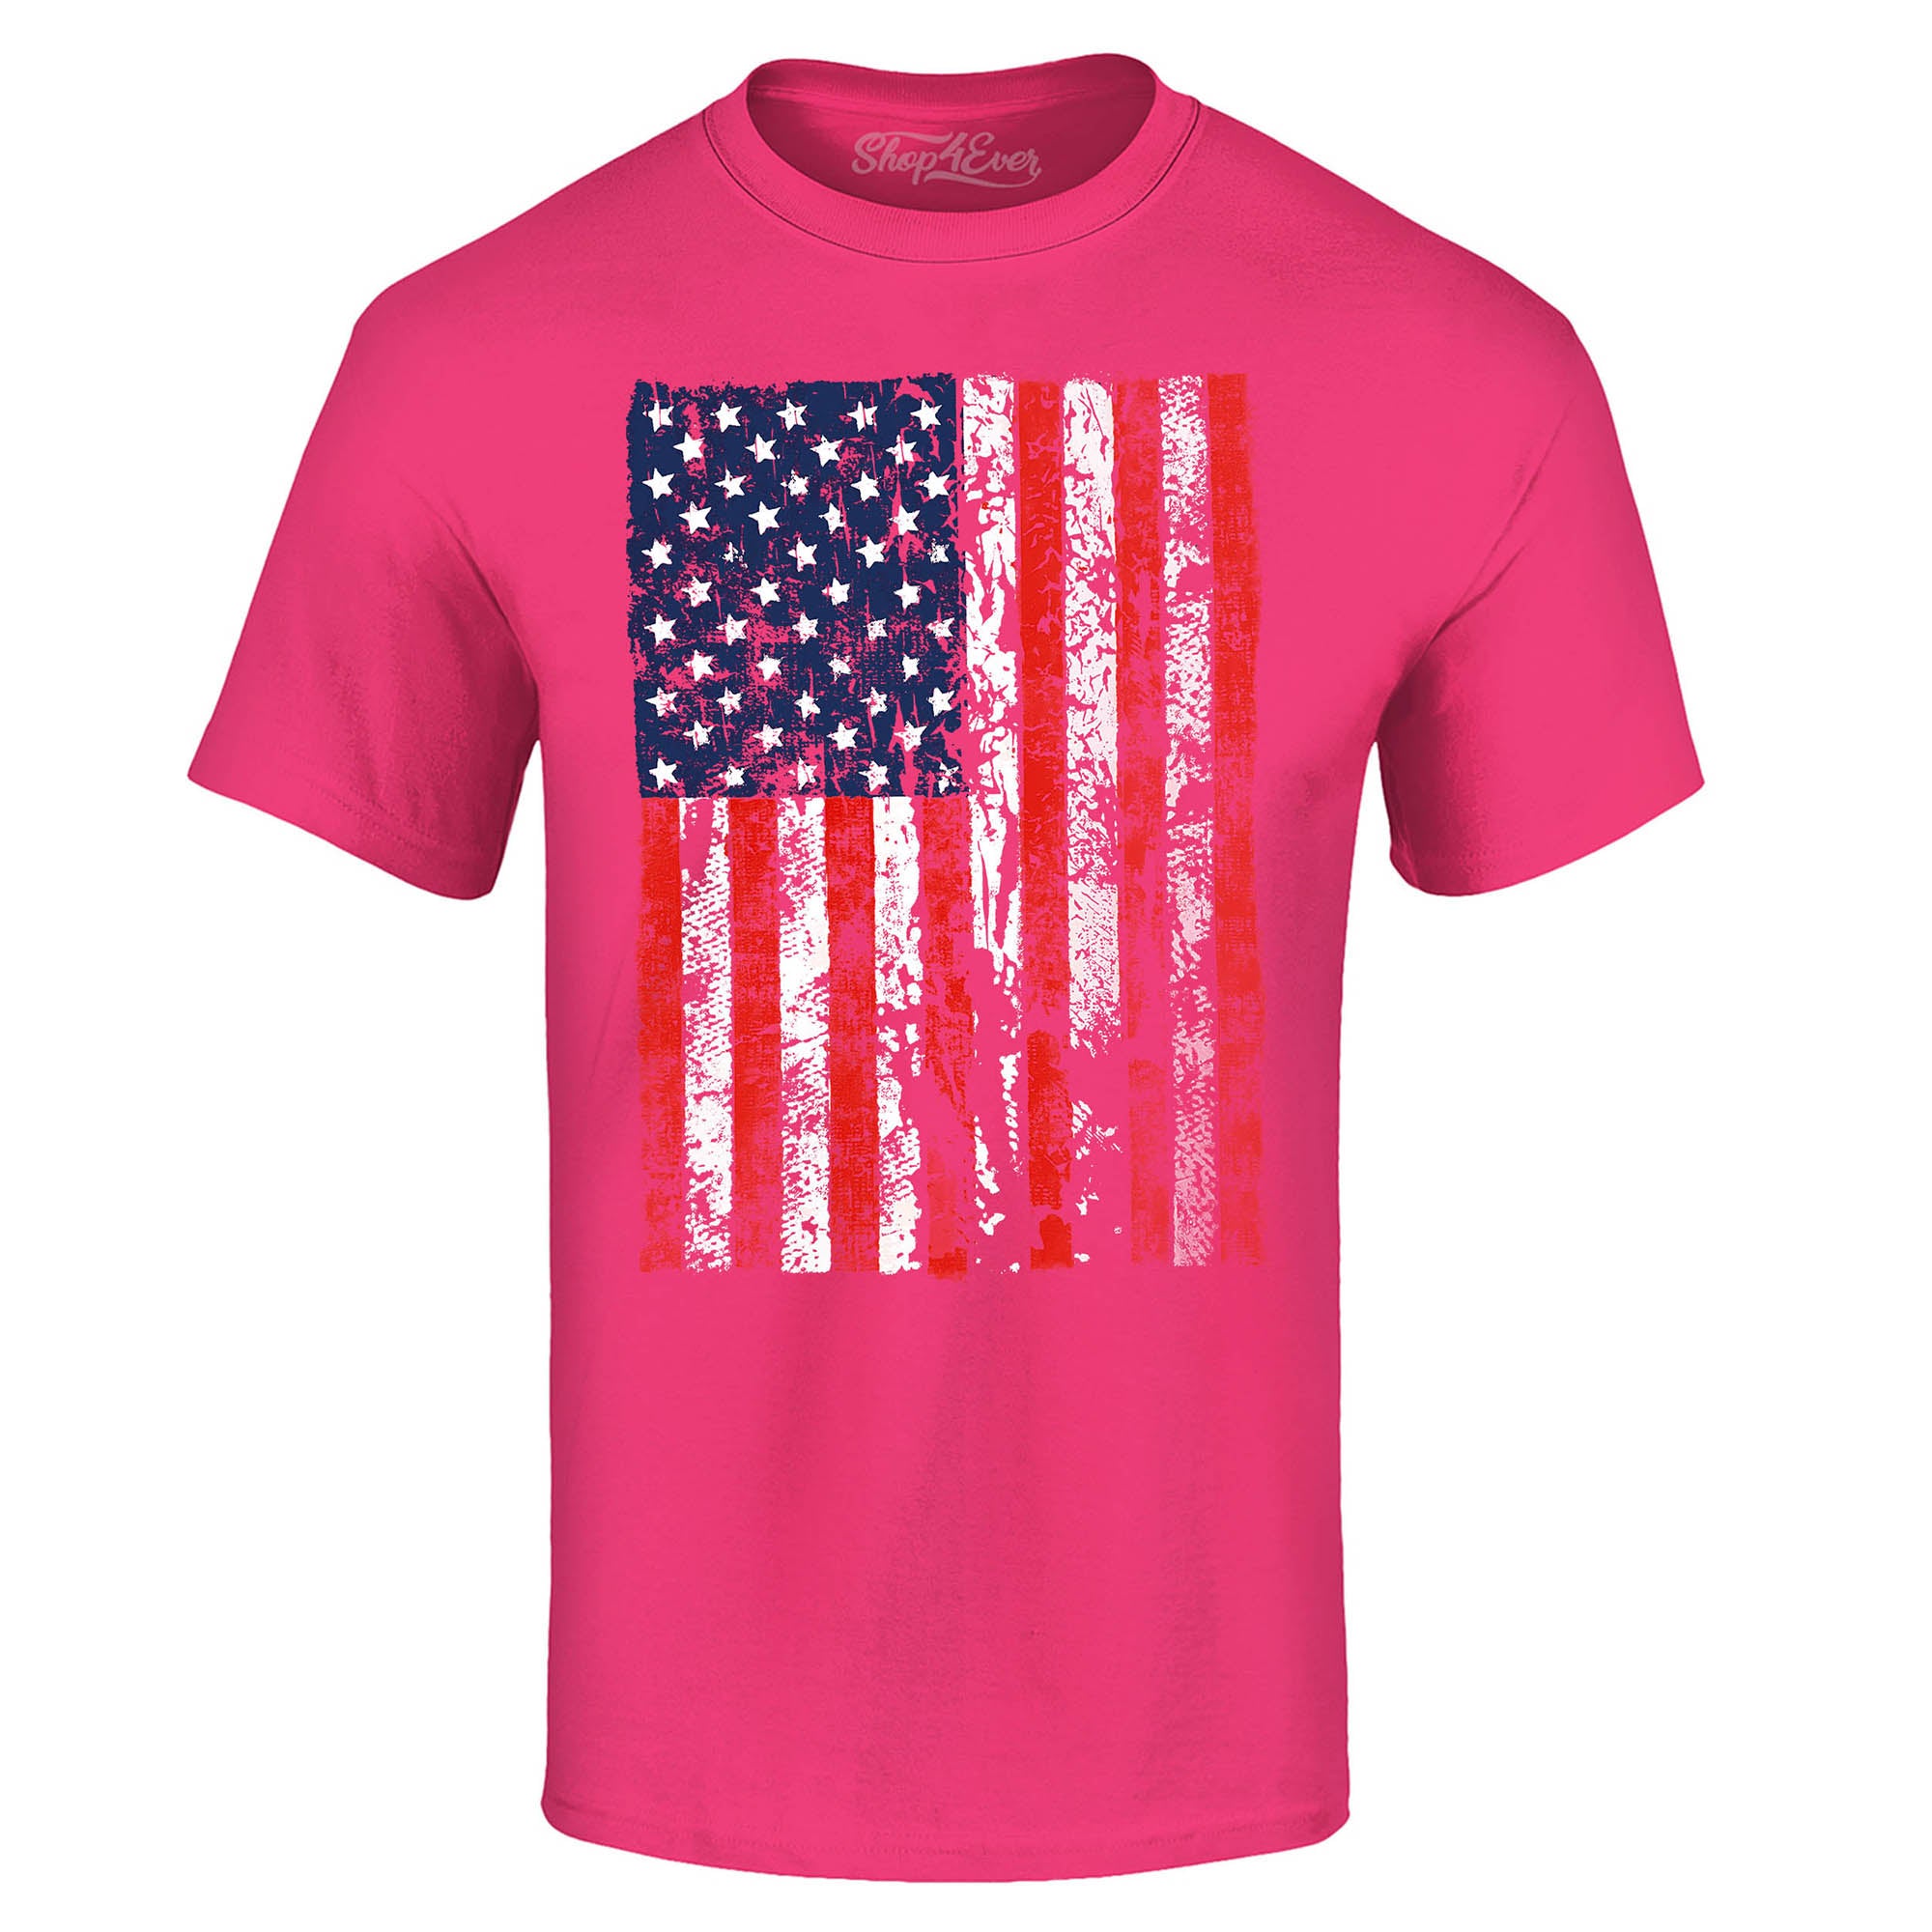 United States of America Flag T-Shirt USA Flag Shirts